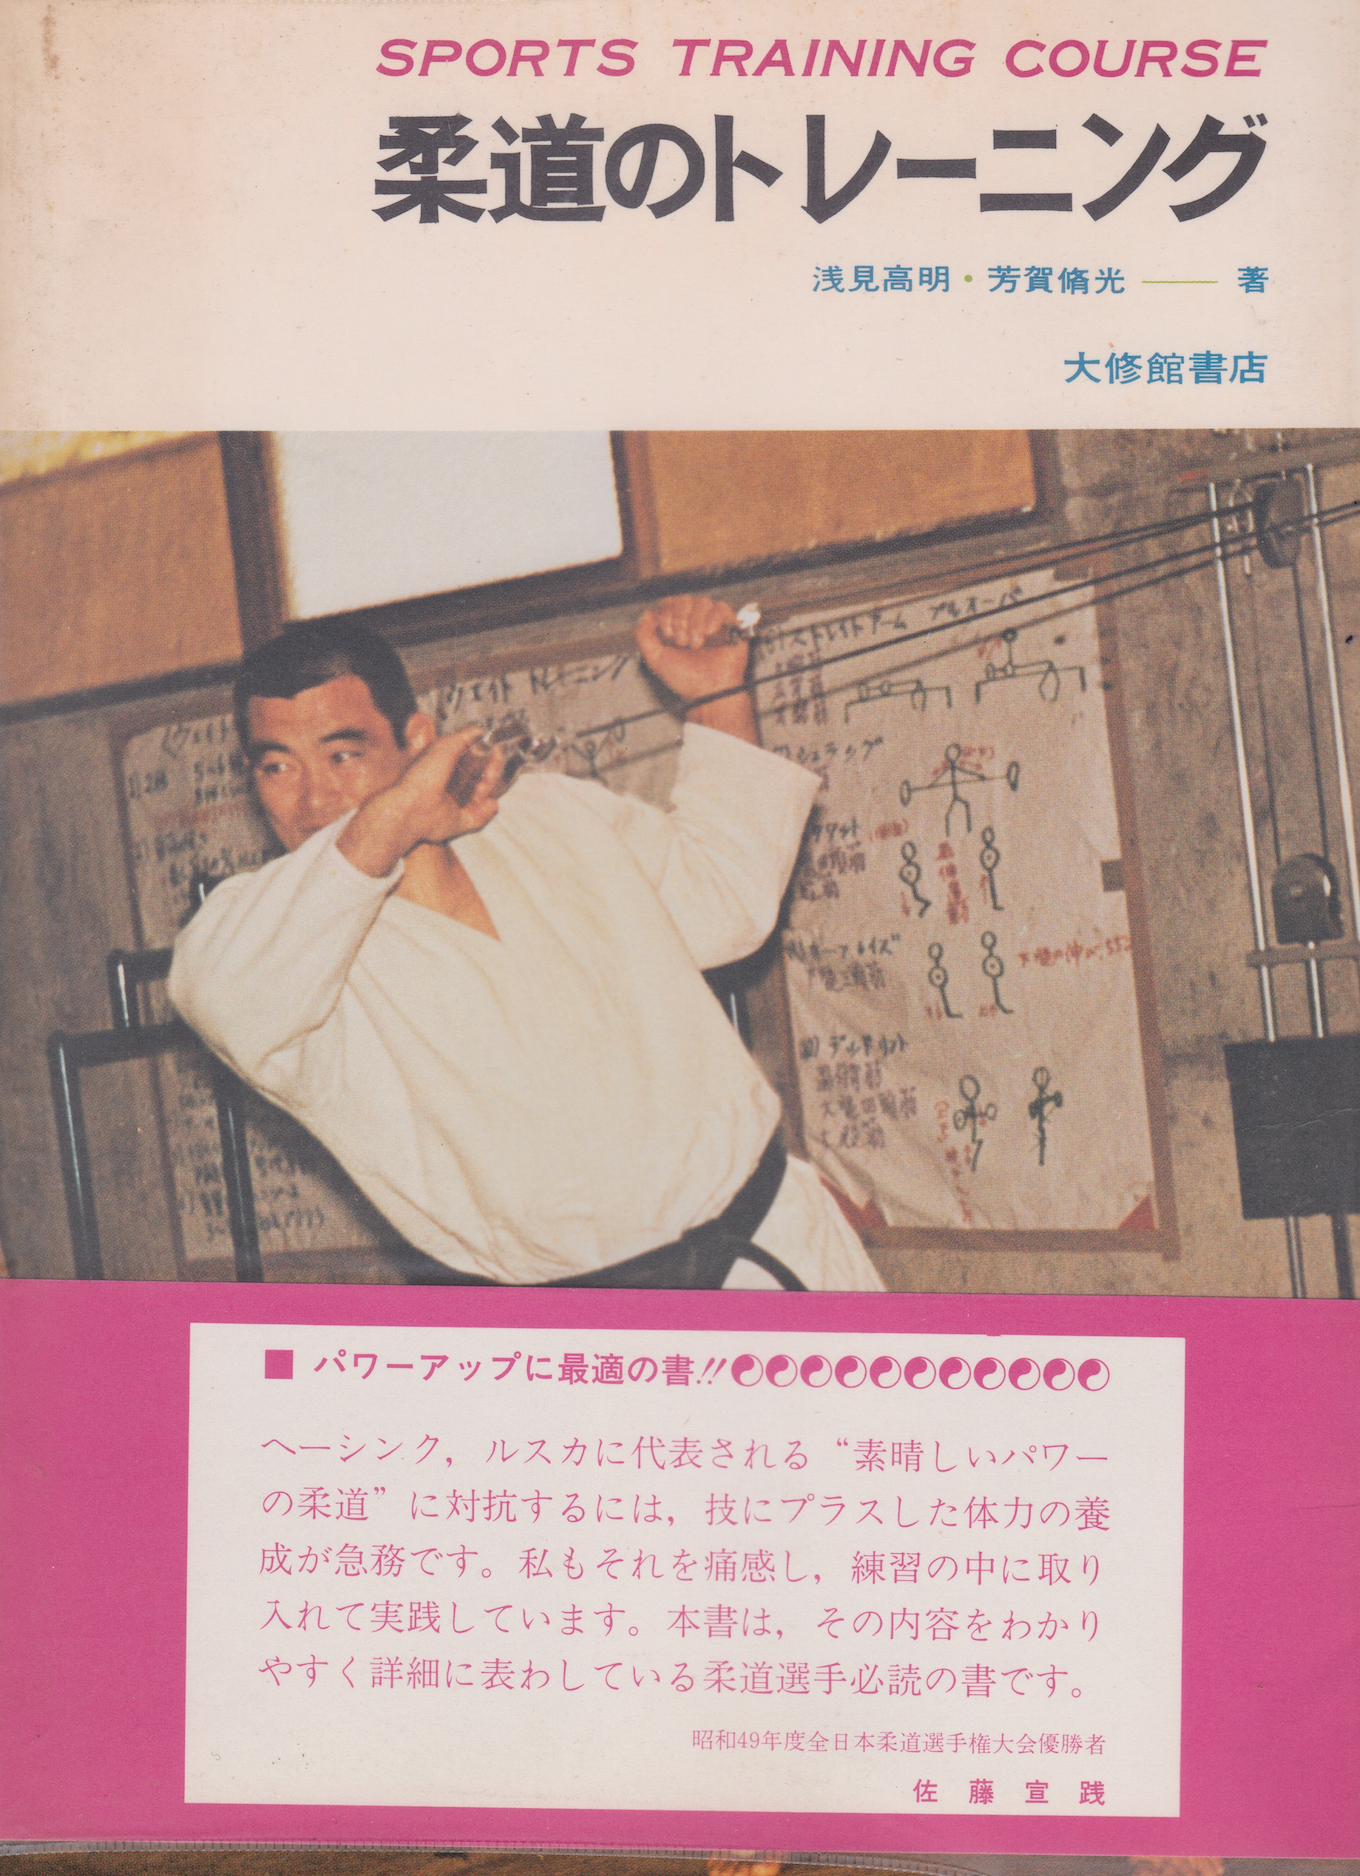 Judo Training Course Book by Takaaki Asami & Shuko Haga (Preowned)